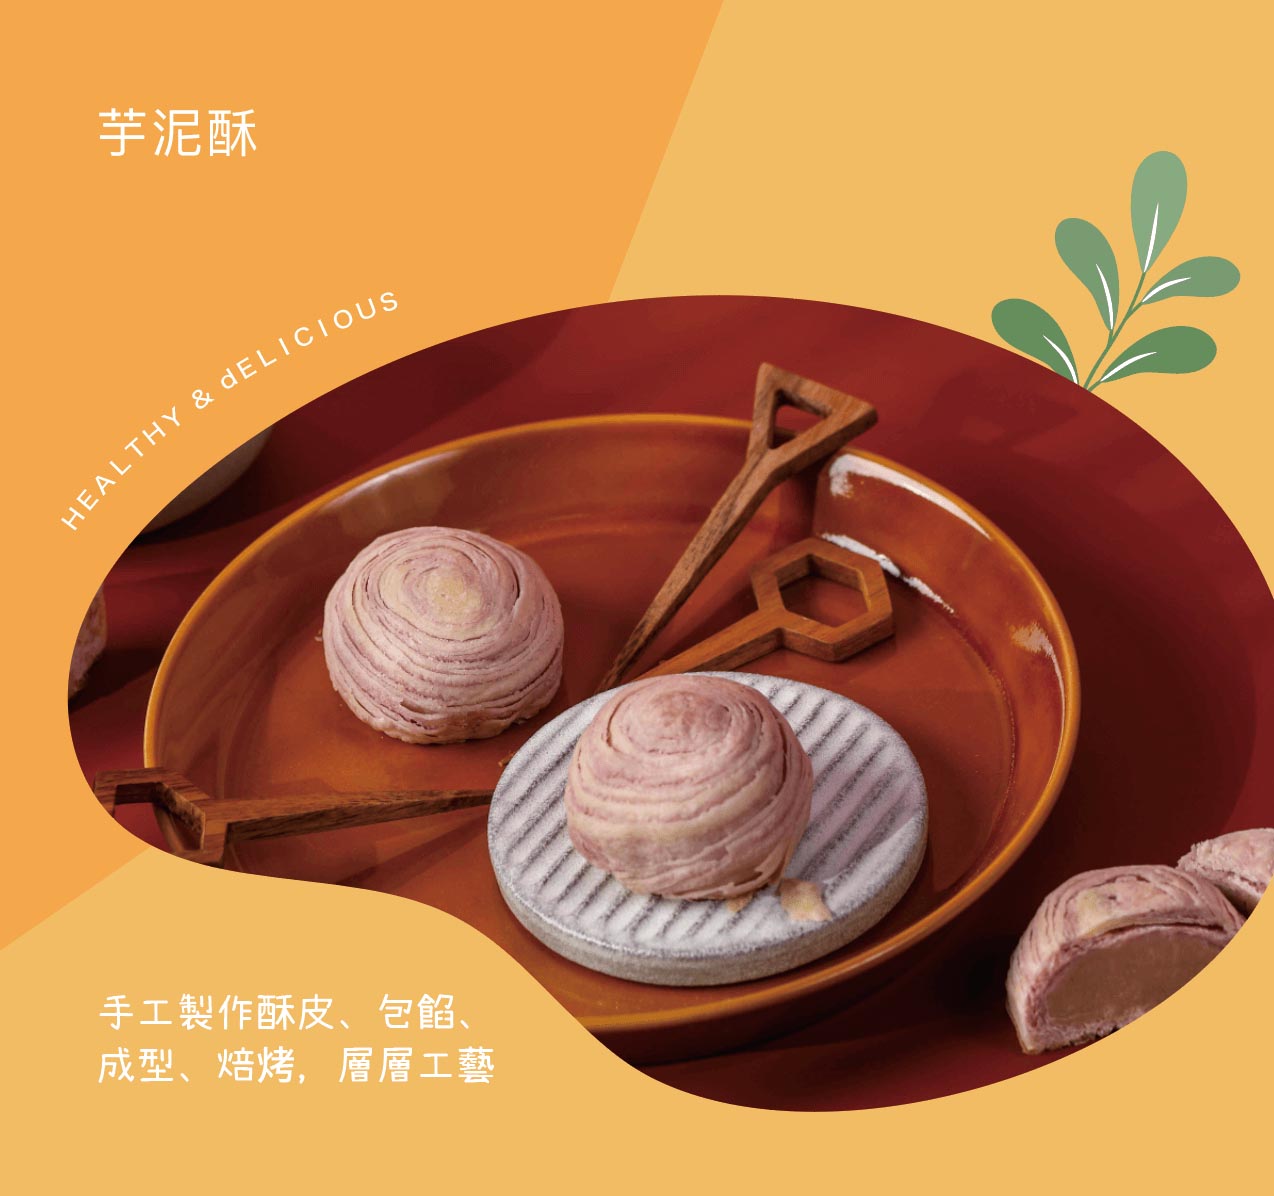 Wholesome - Taro Pastry 【8 pcs】